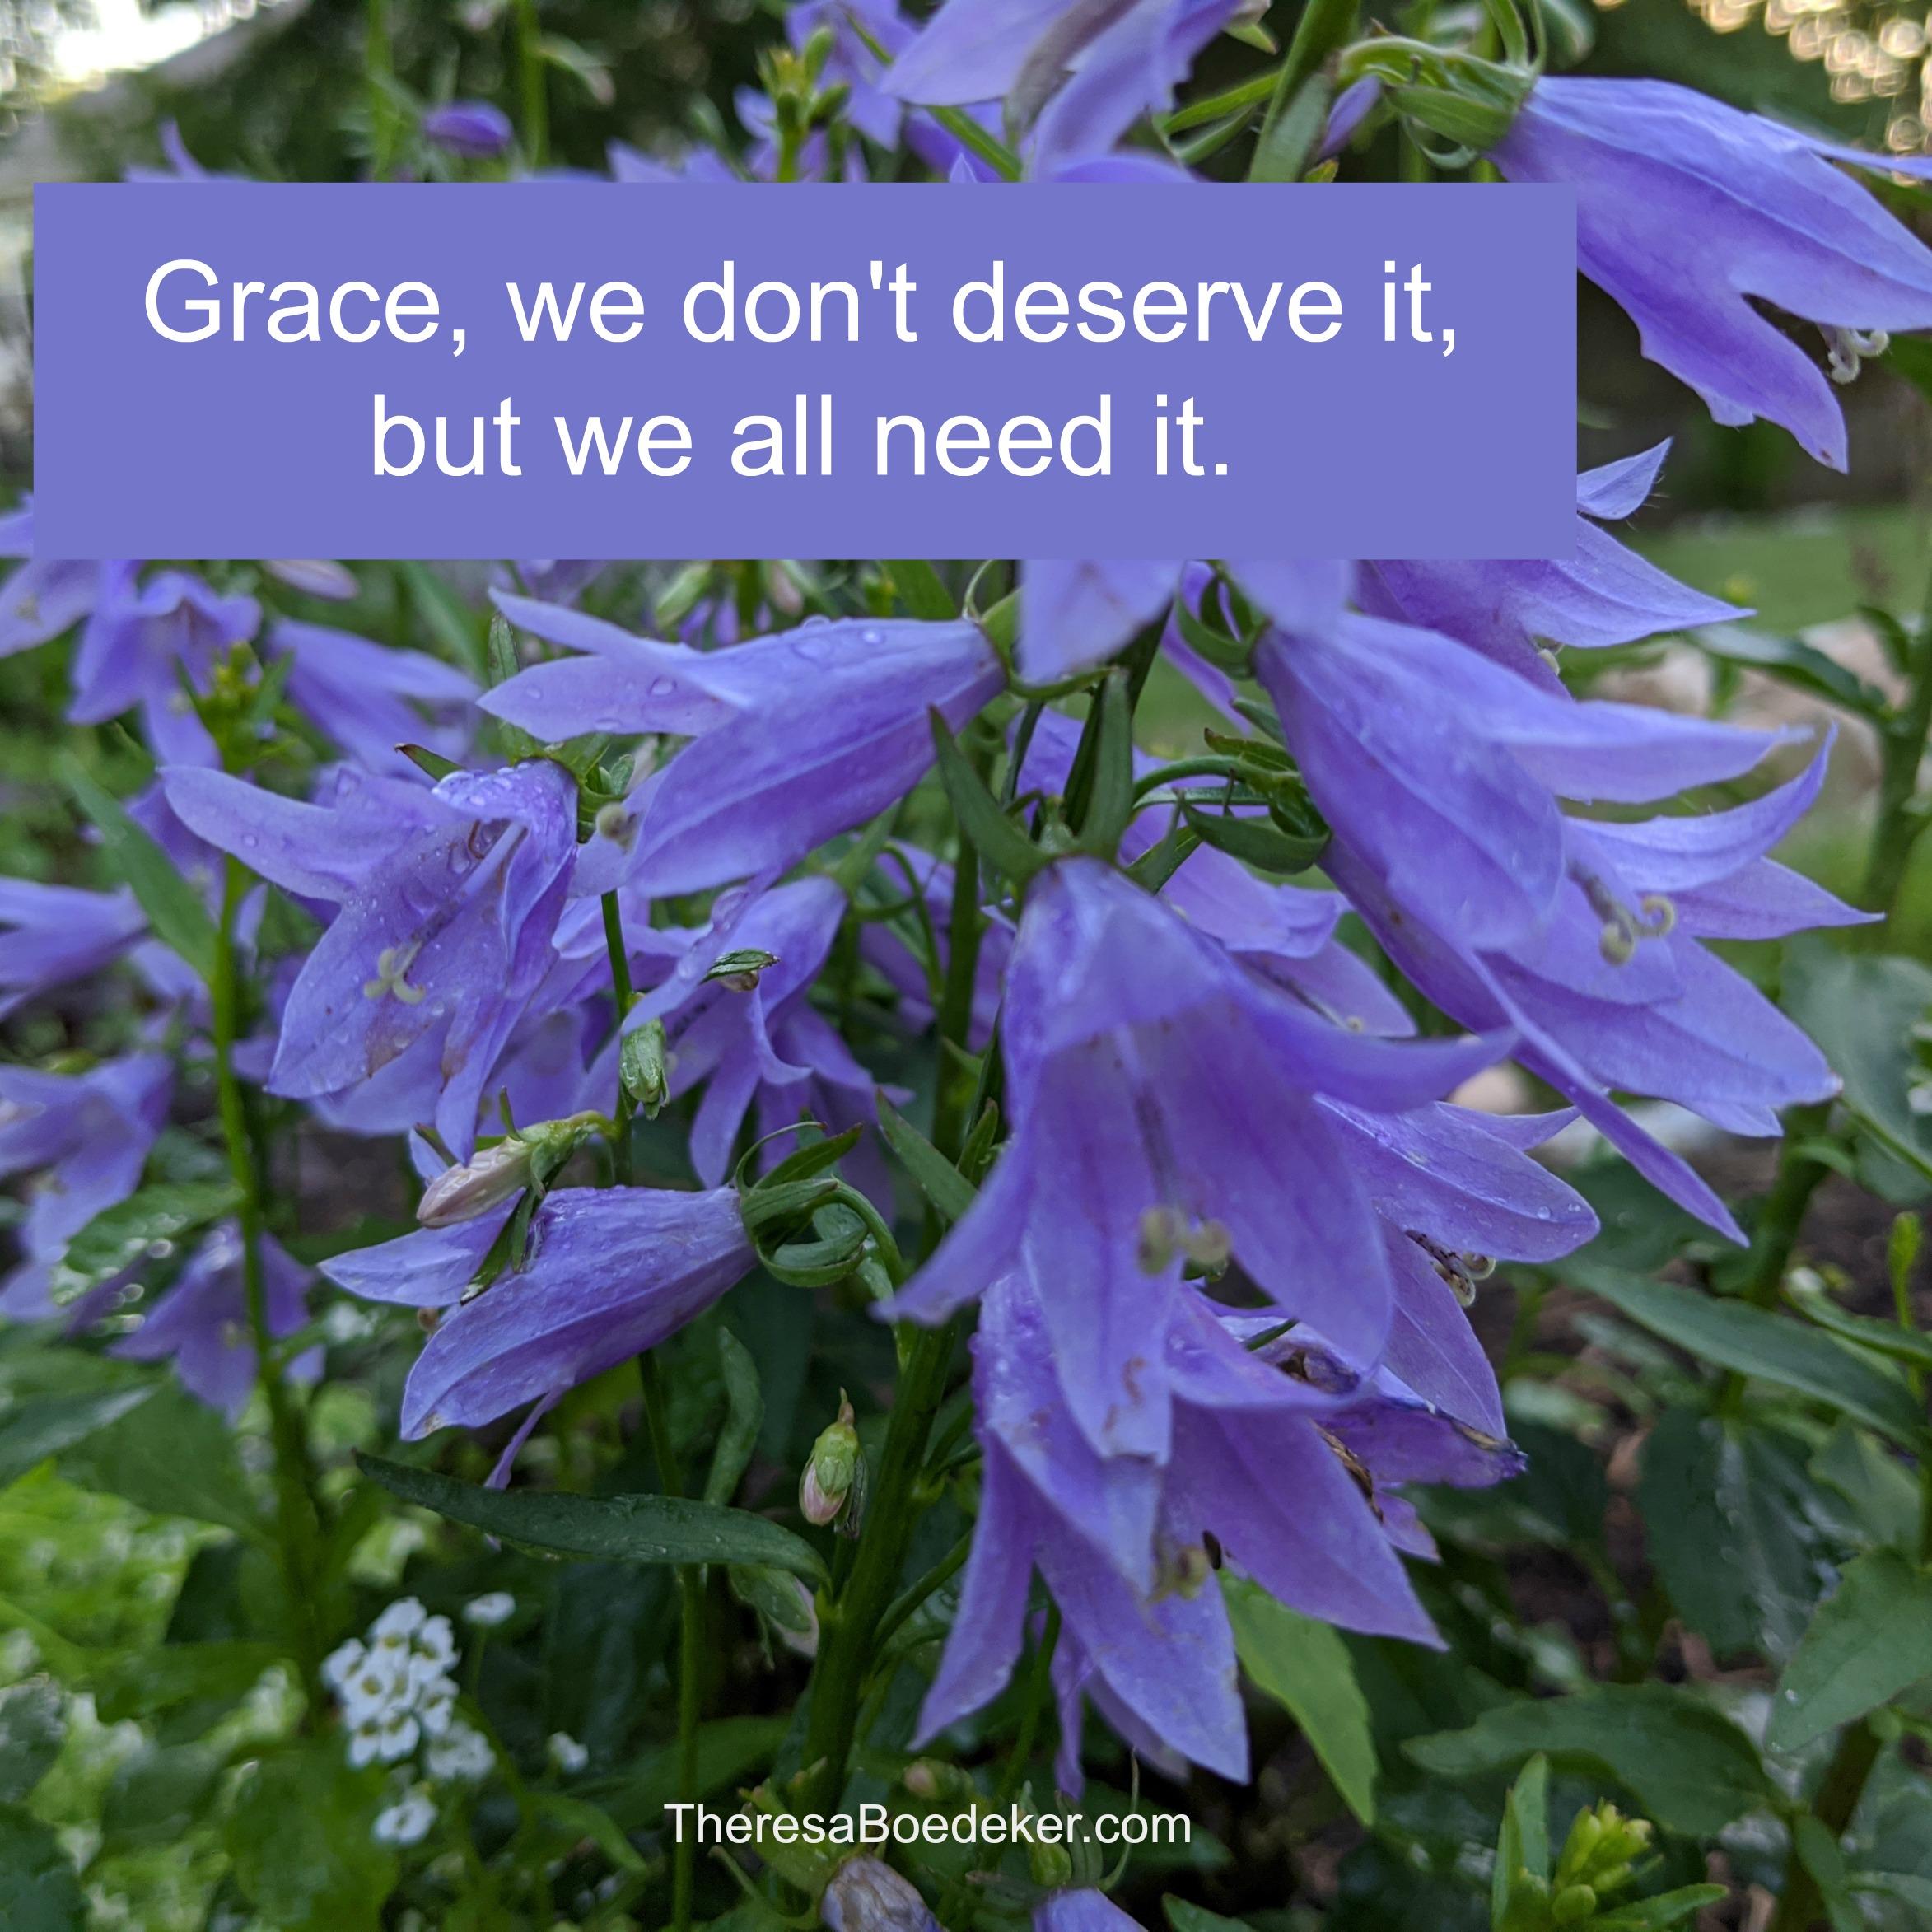 We don't deserve grace, but we all need grace. 